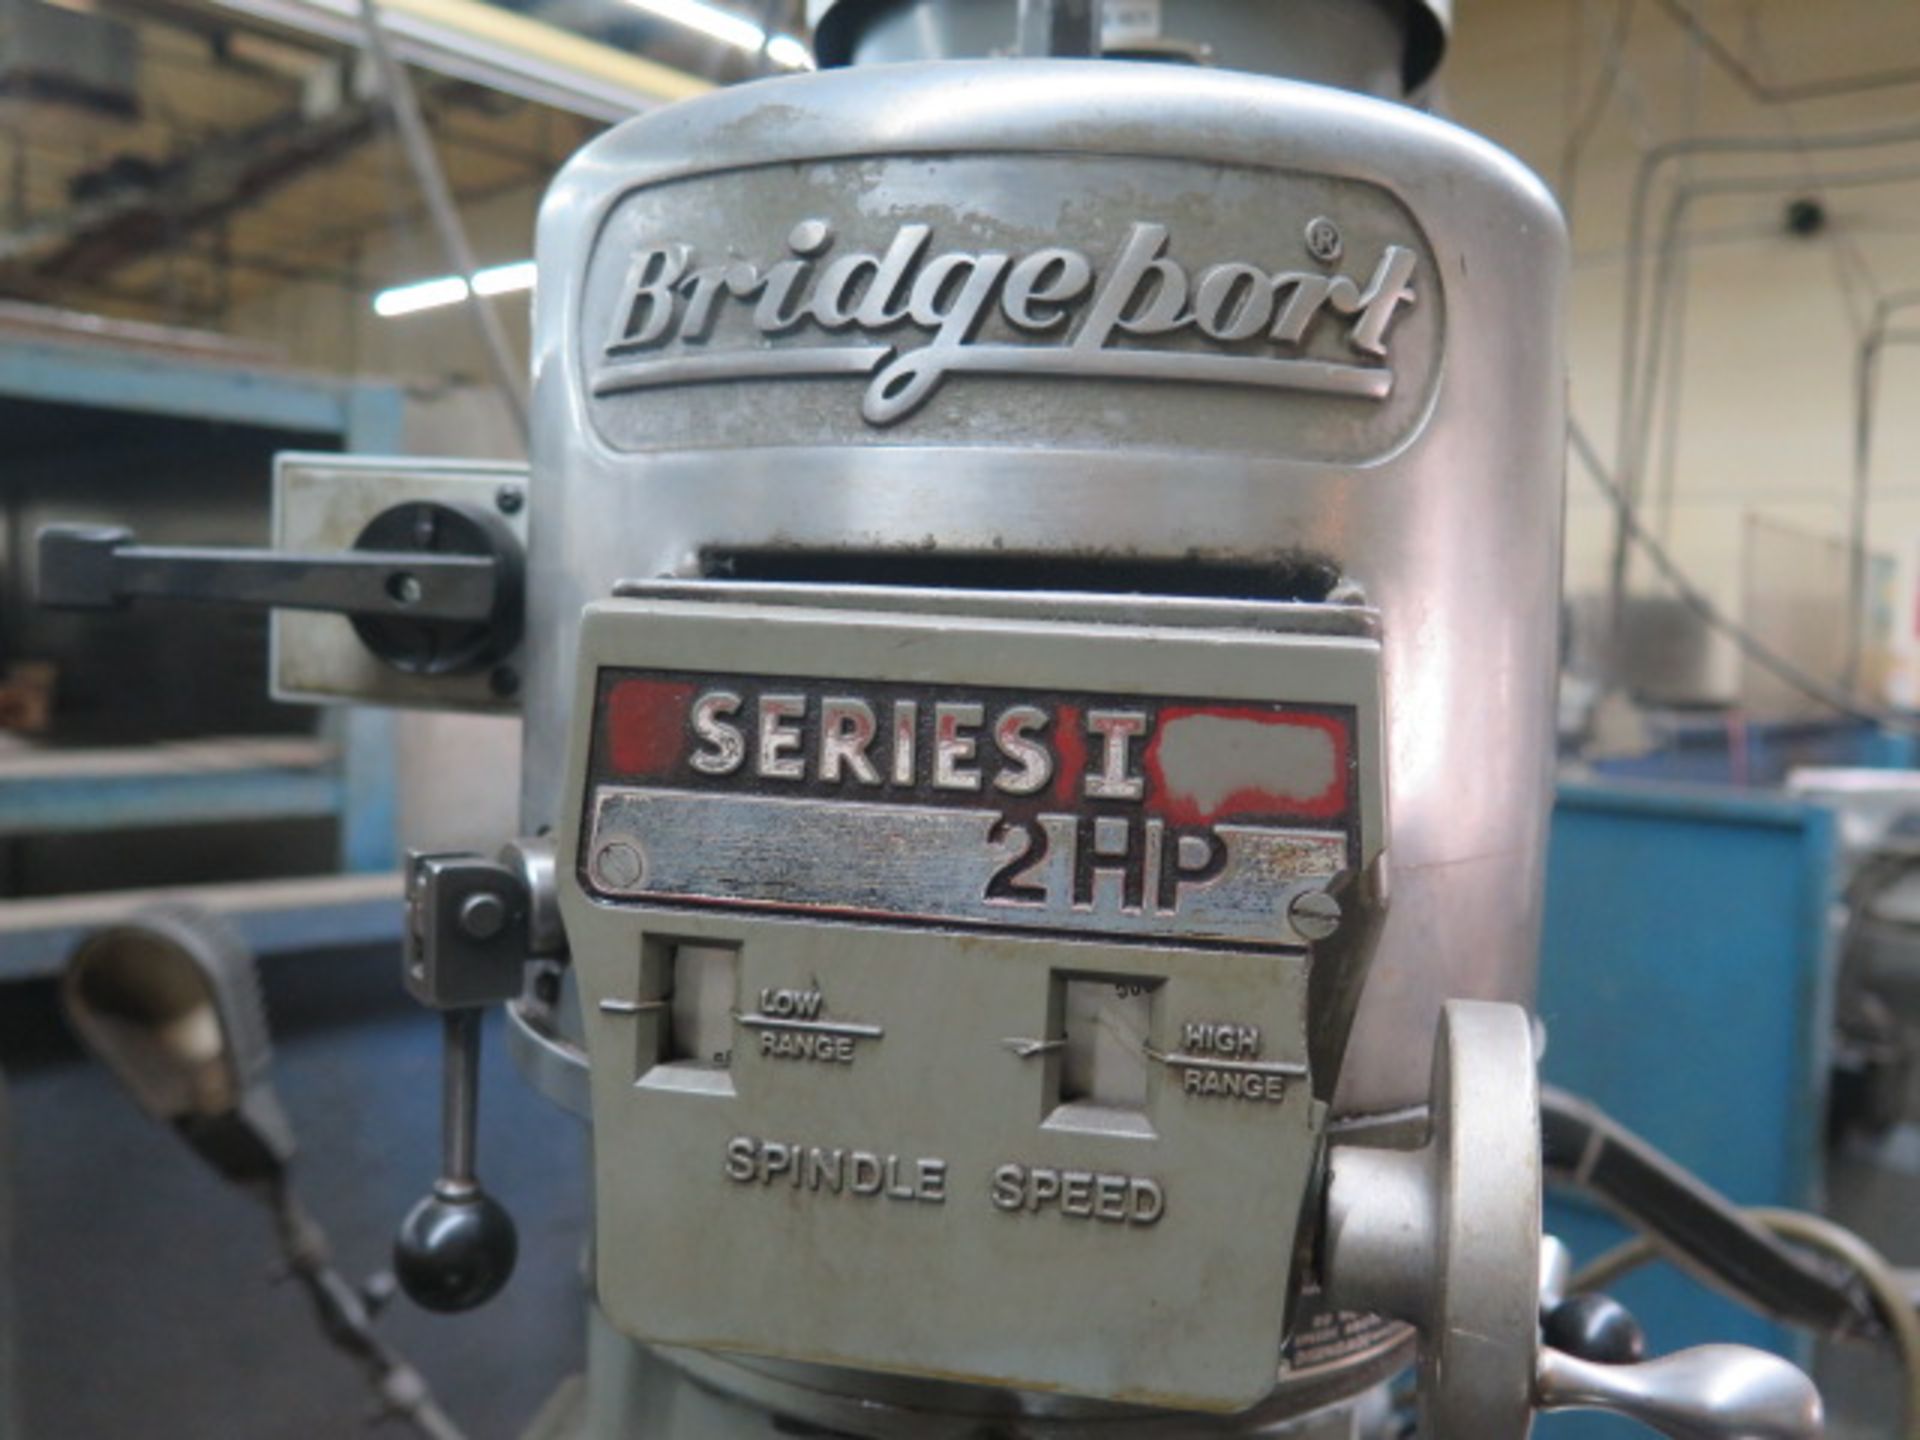 Bridgeport Series 1 – 2Hp Mill s/n 217342 w/ Mitutoyo DRO, 60-4200 Dial Change RPM, SOLD AS IS - Image 10 of 10